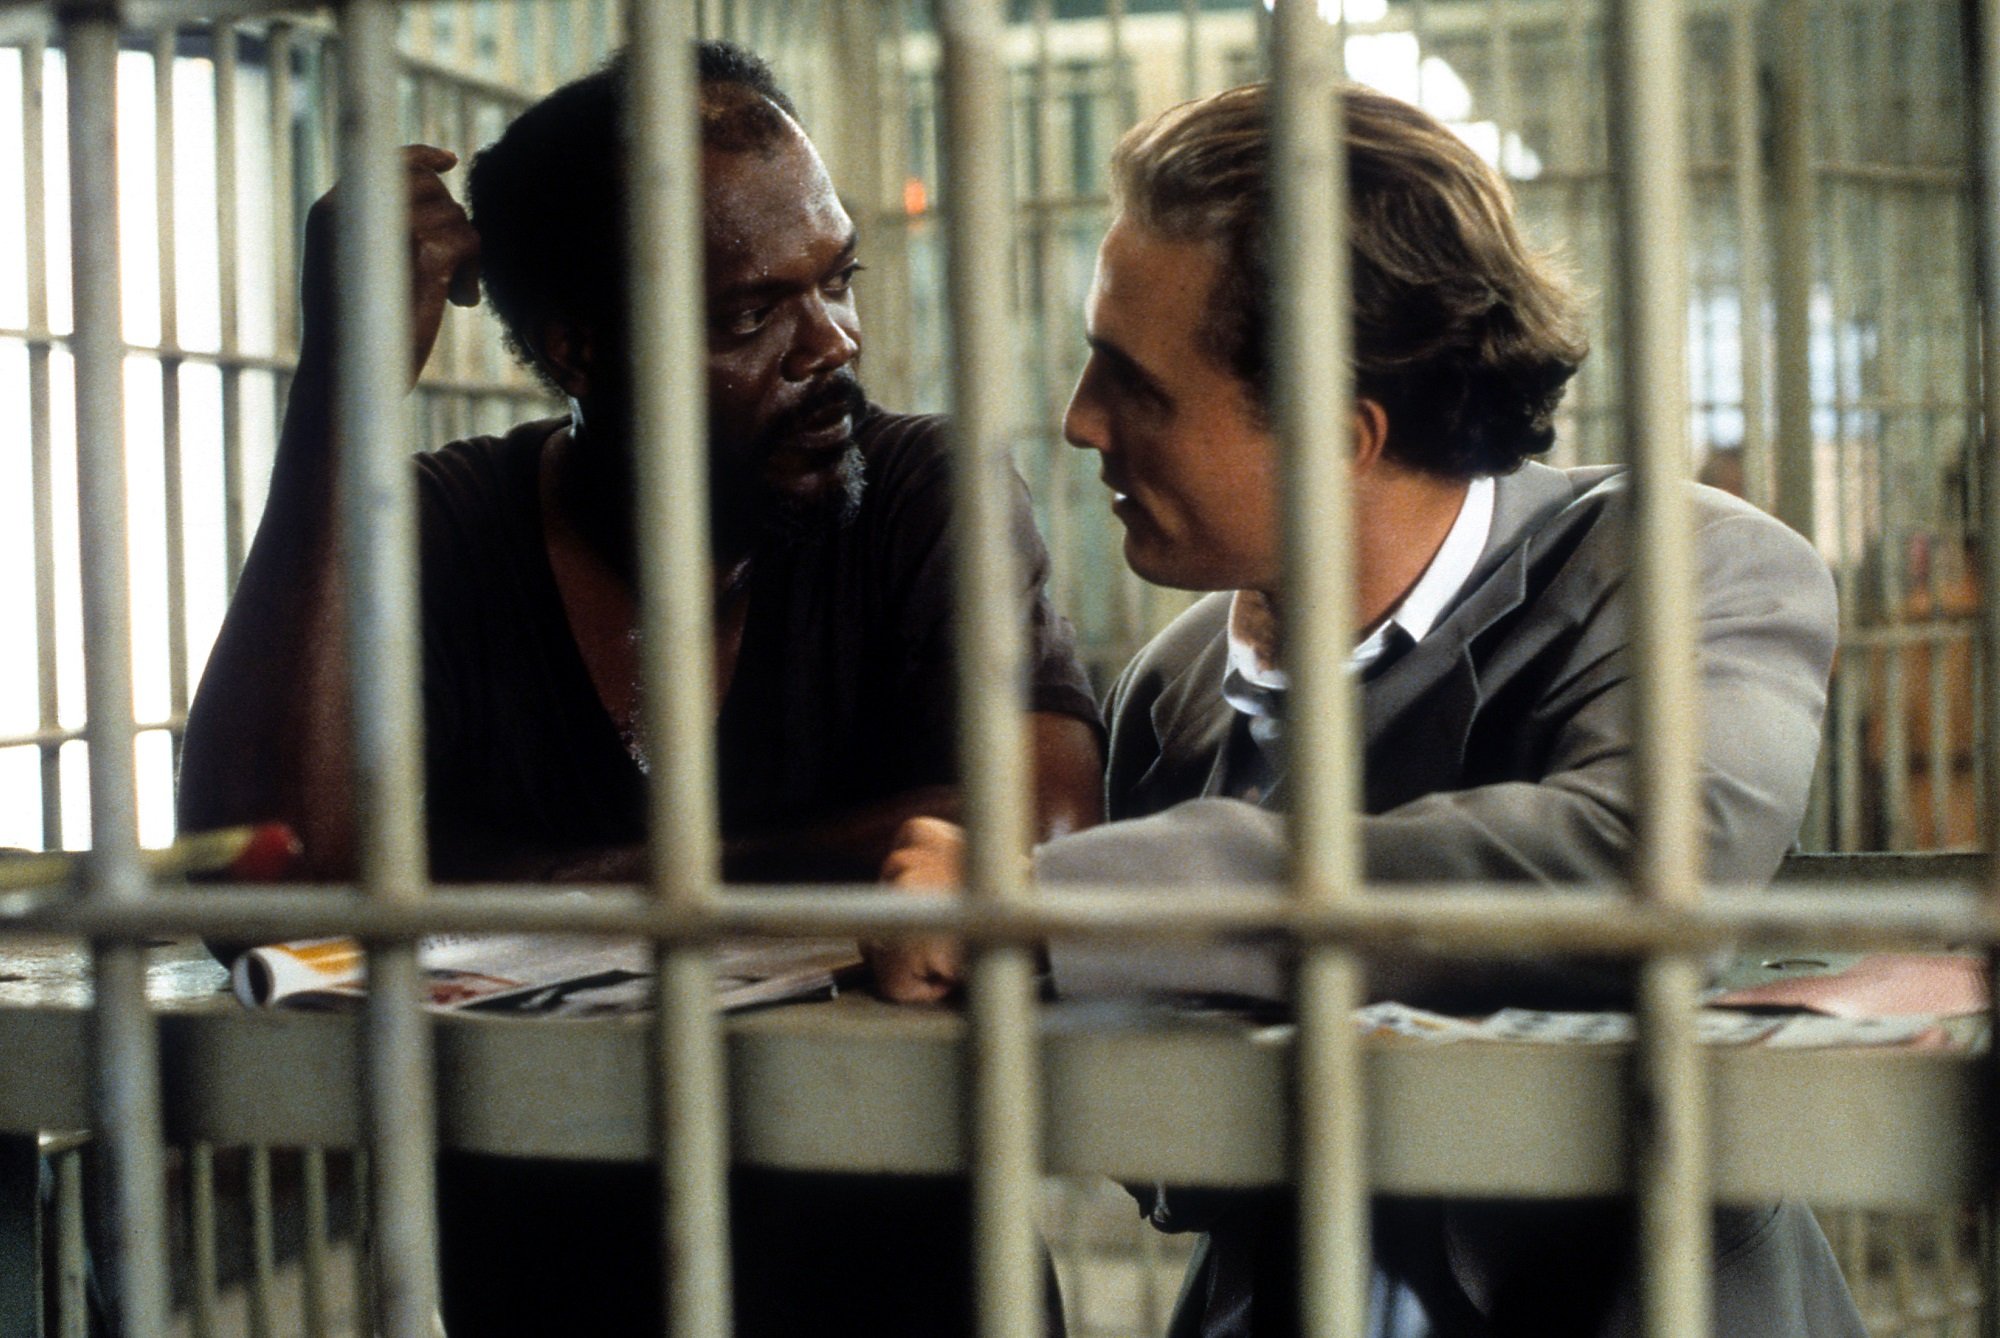 Matthew McConaughey and Samuel L. Jackson in jail